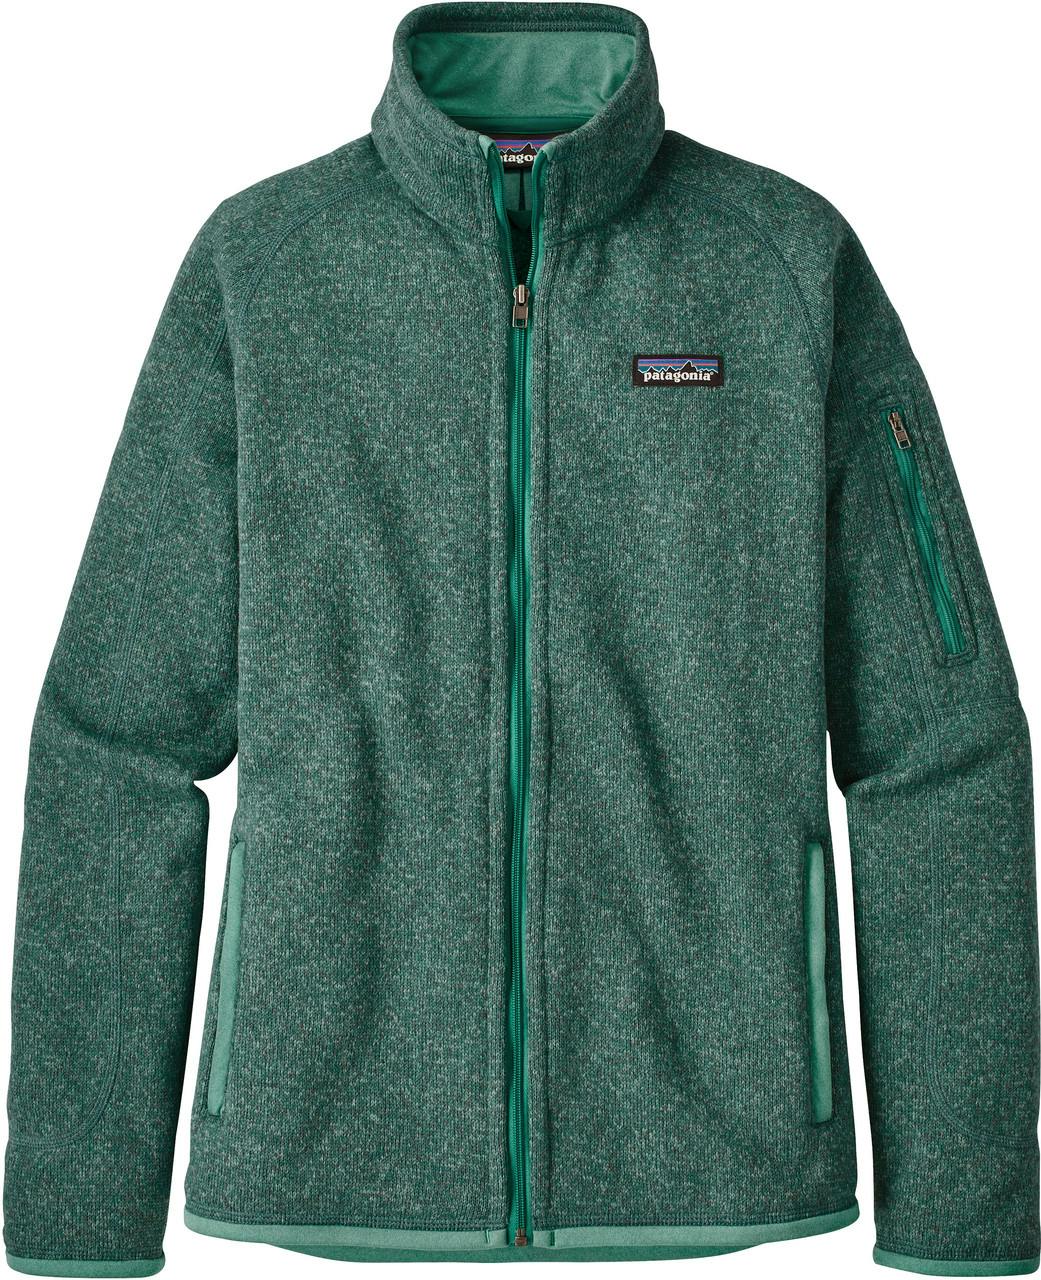 Better Sweater Jacket Beryl Green w/Beryl Green